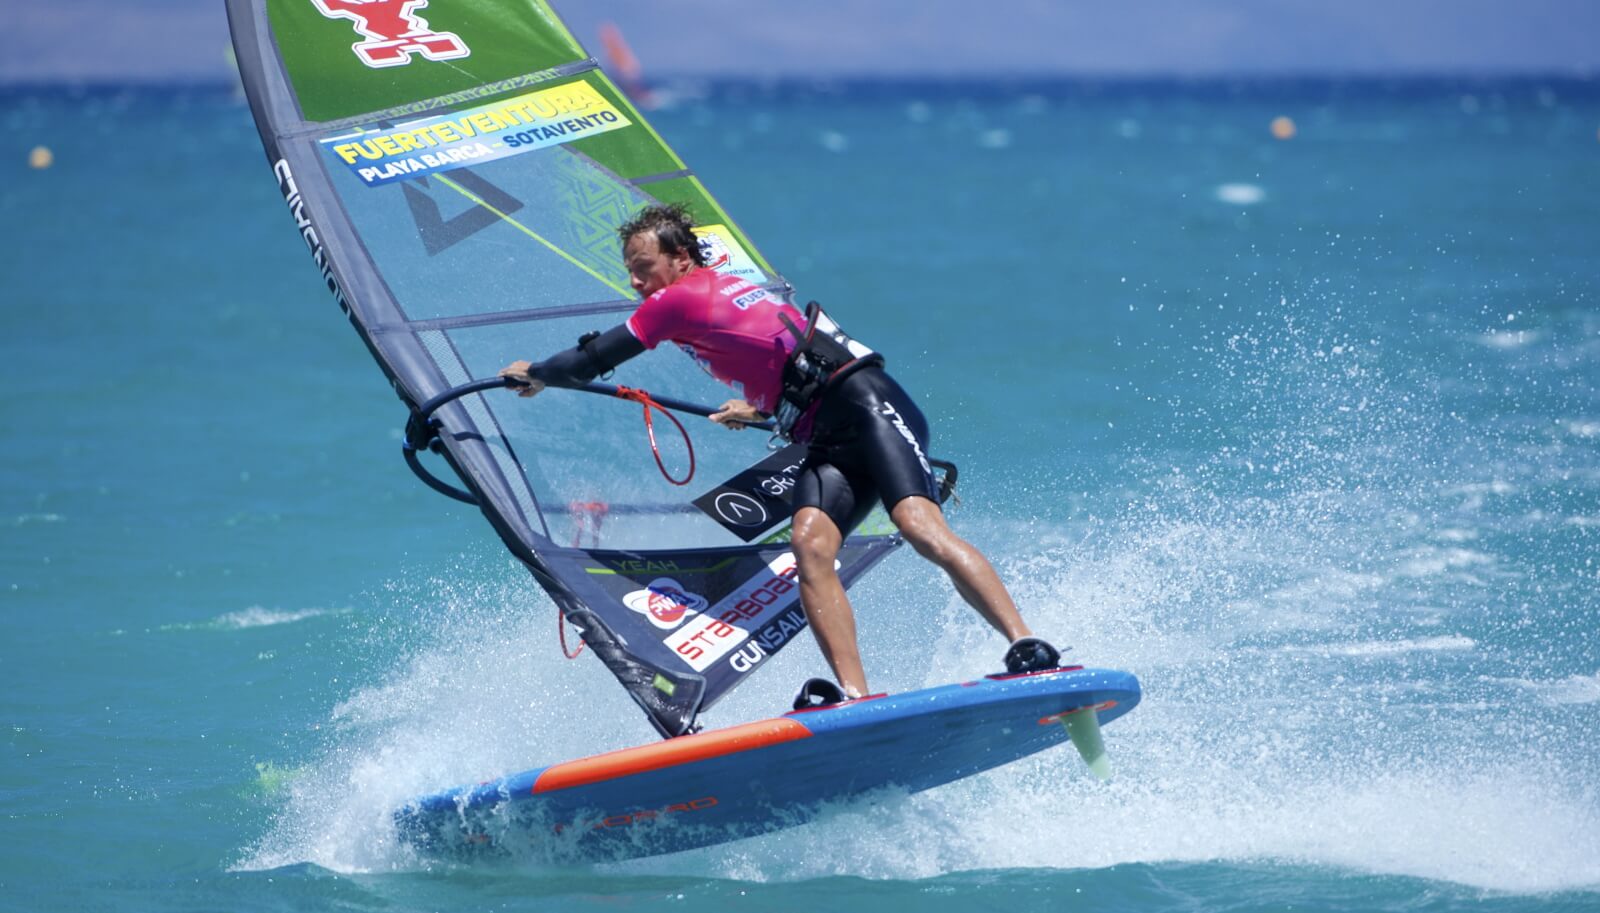 Mistrzostwa Świata w windsurfingu fot. EPA/Carlos de Saa 